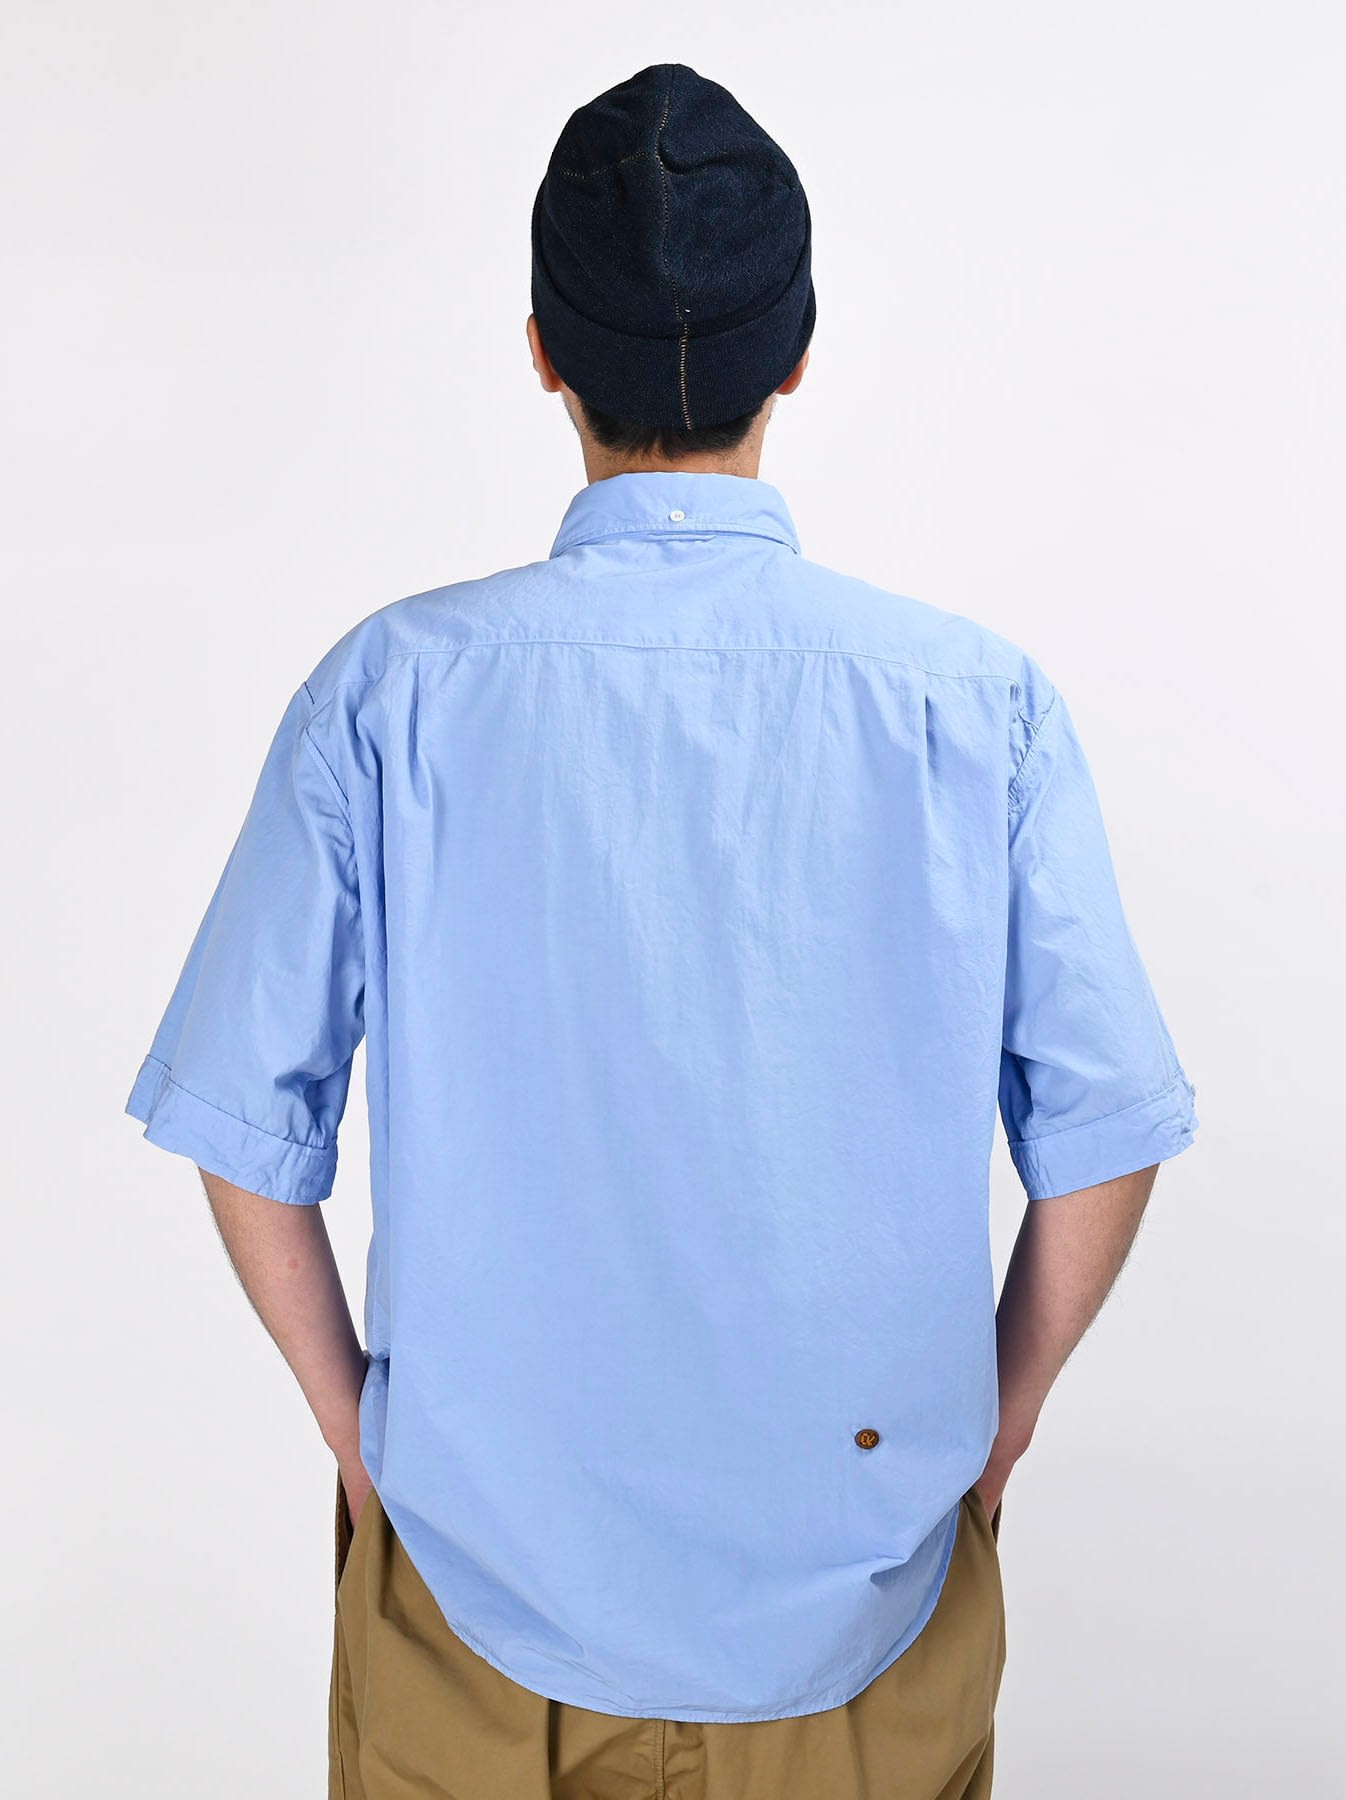 Damp Cotton Anuenue Ocean Shirt - 45r